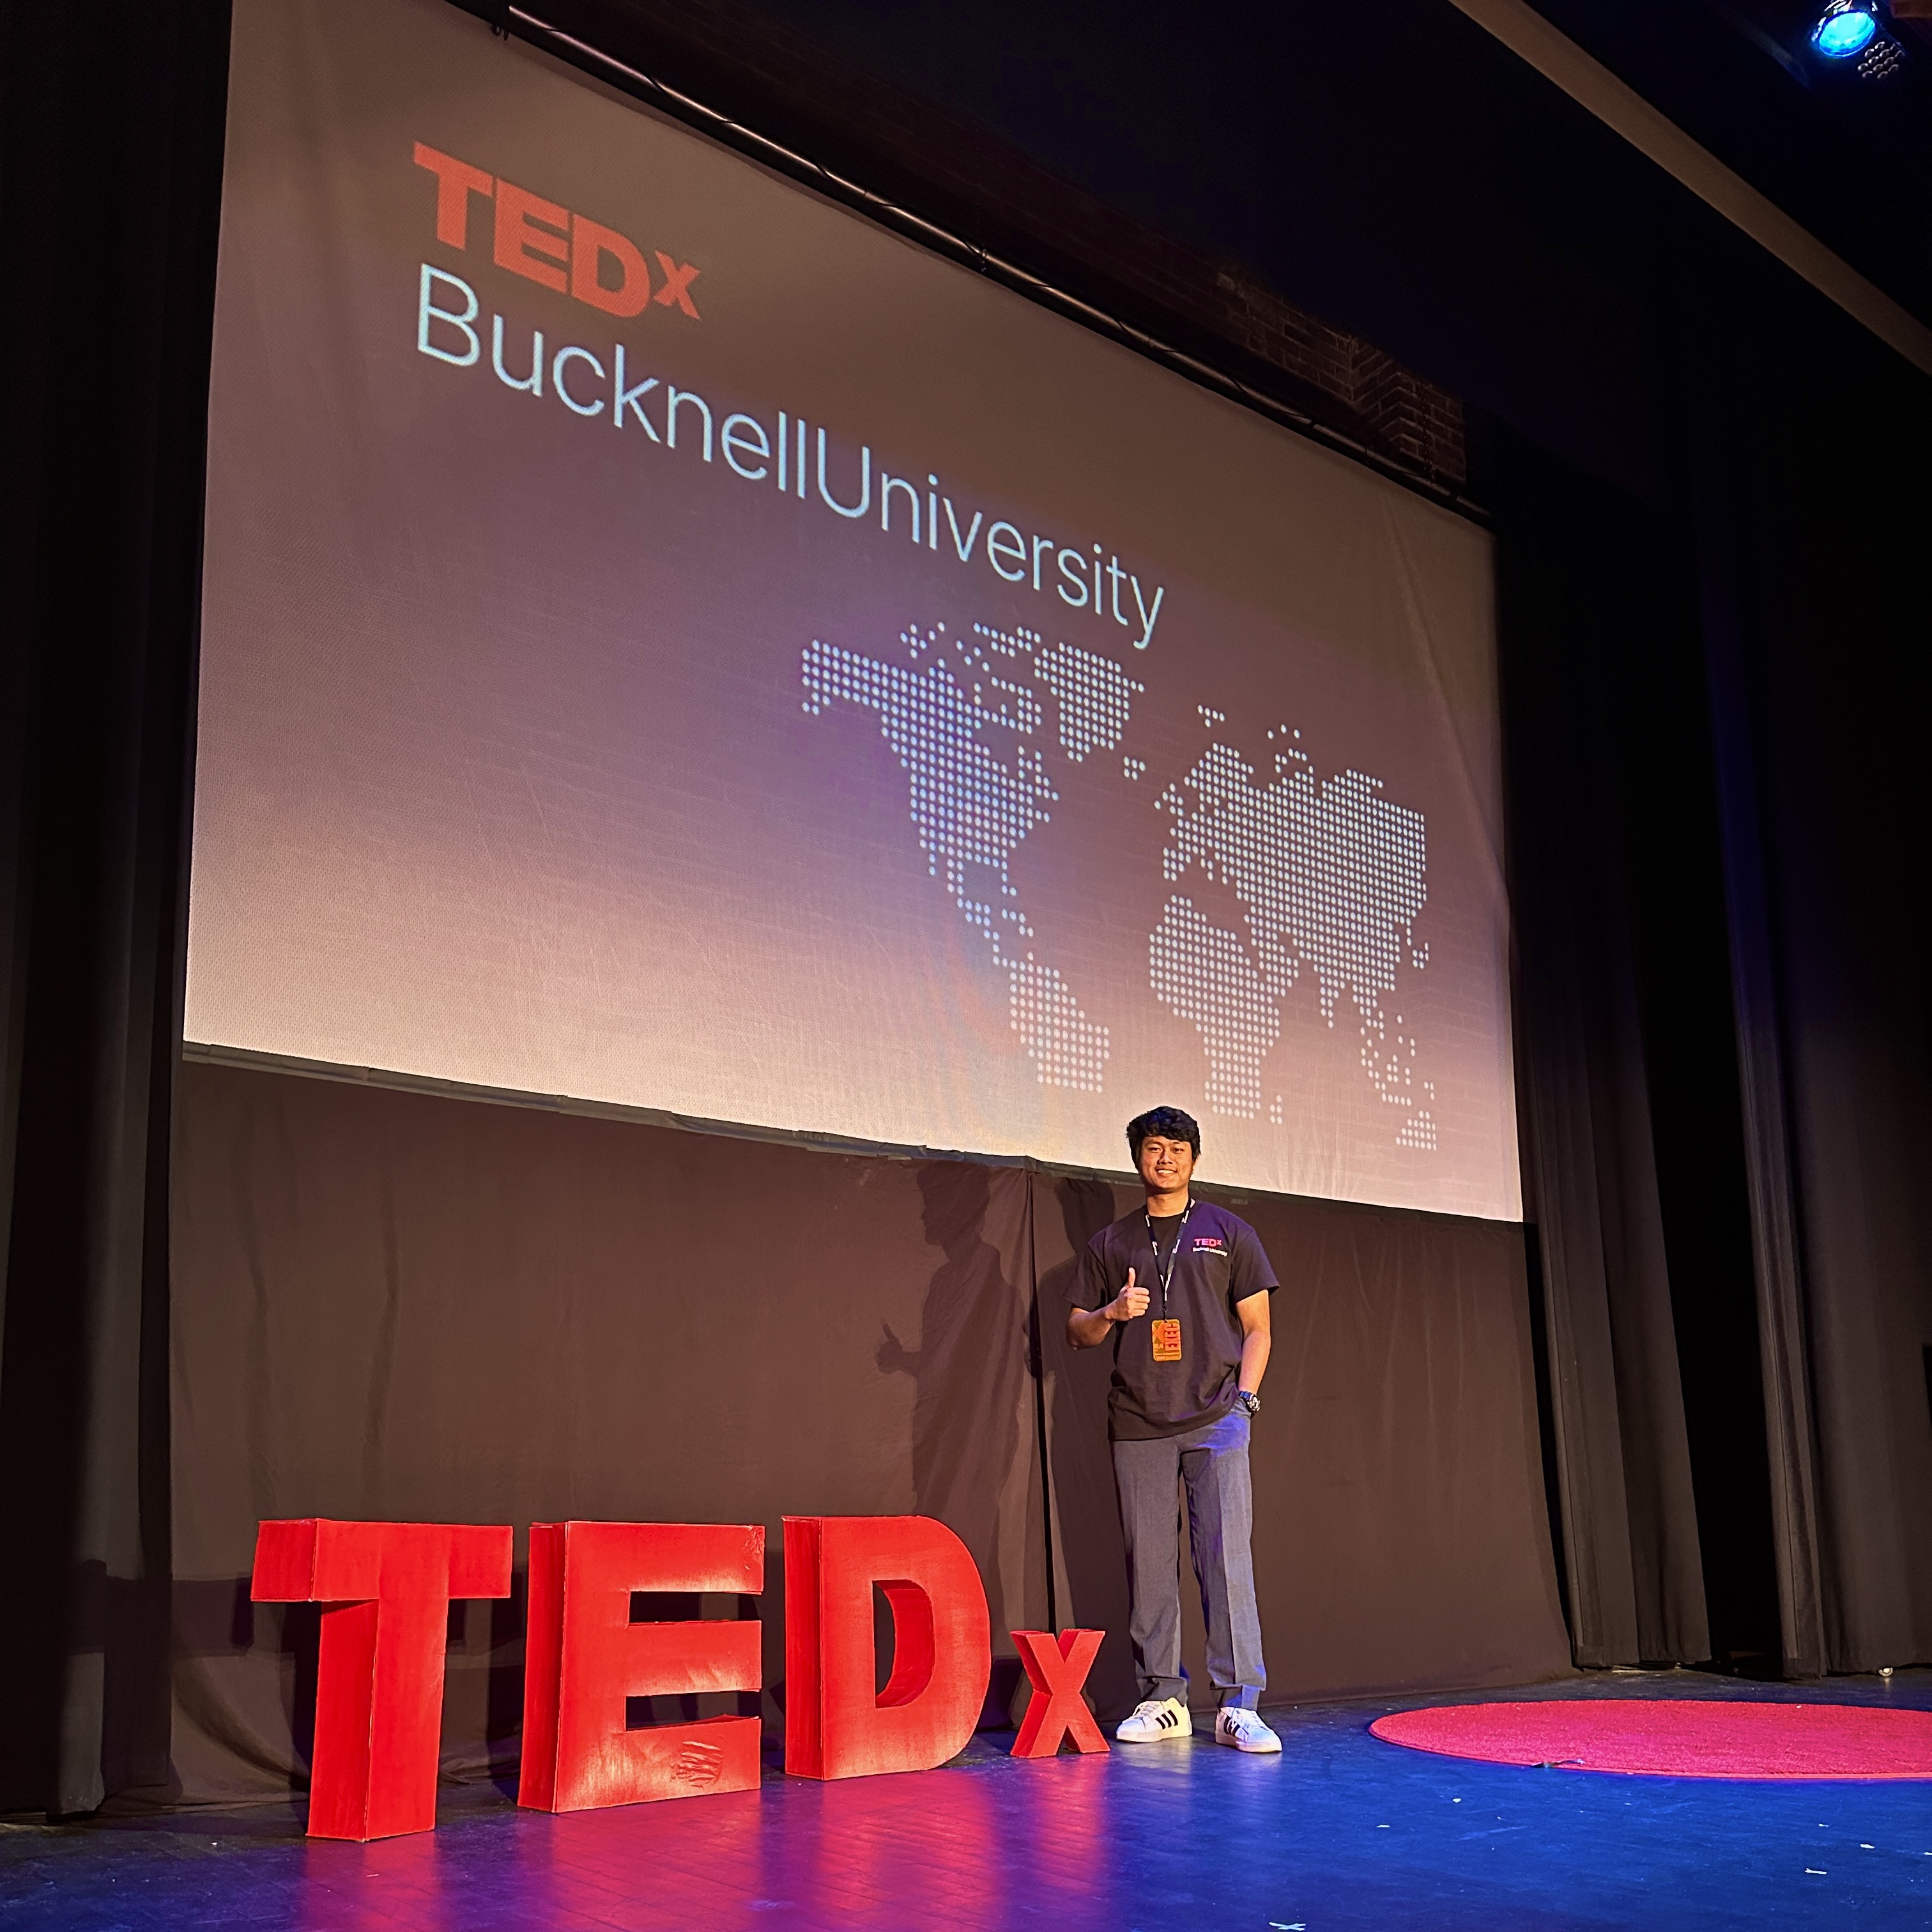 Nolan at TEDx Bucknell University